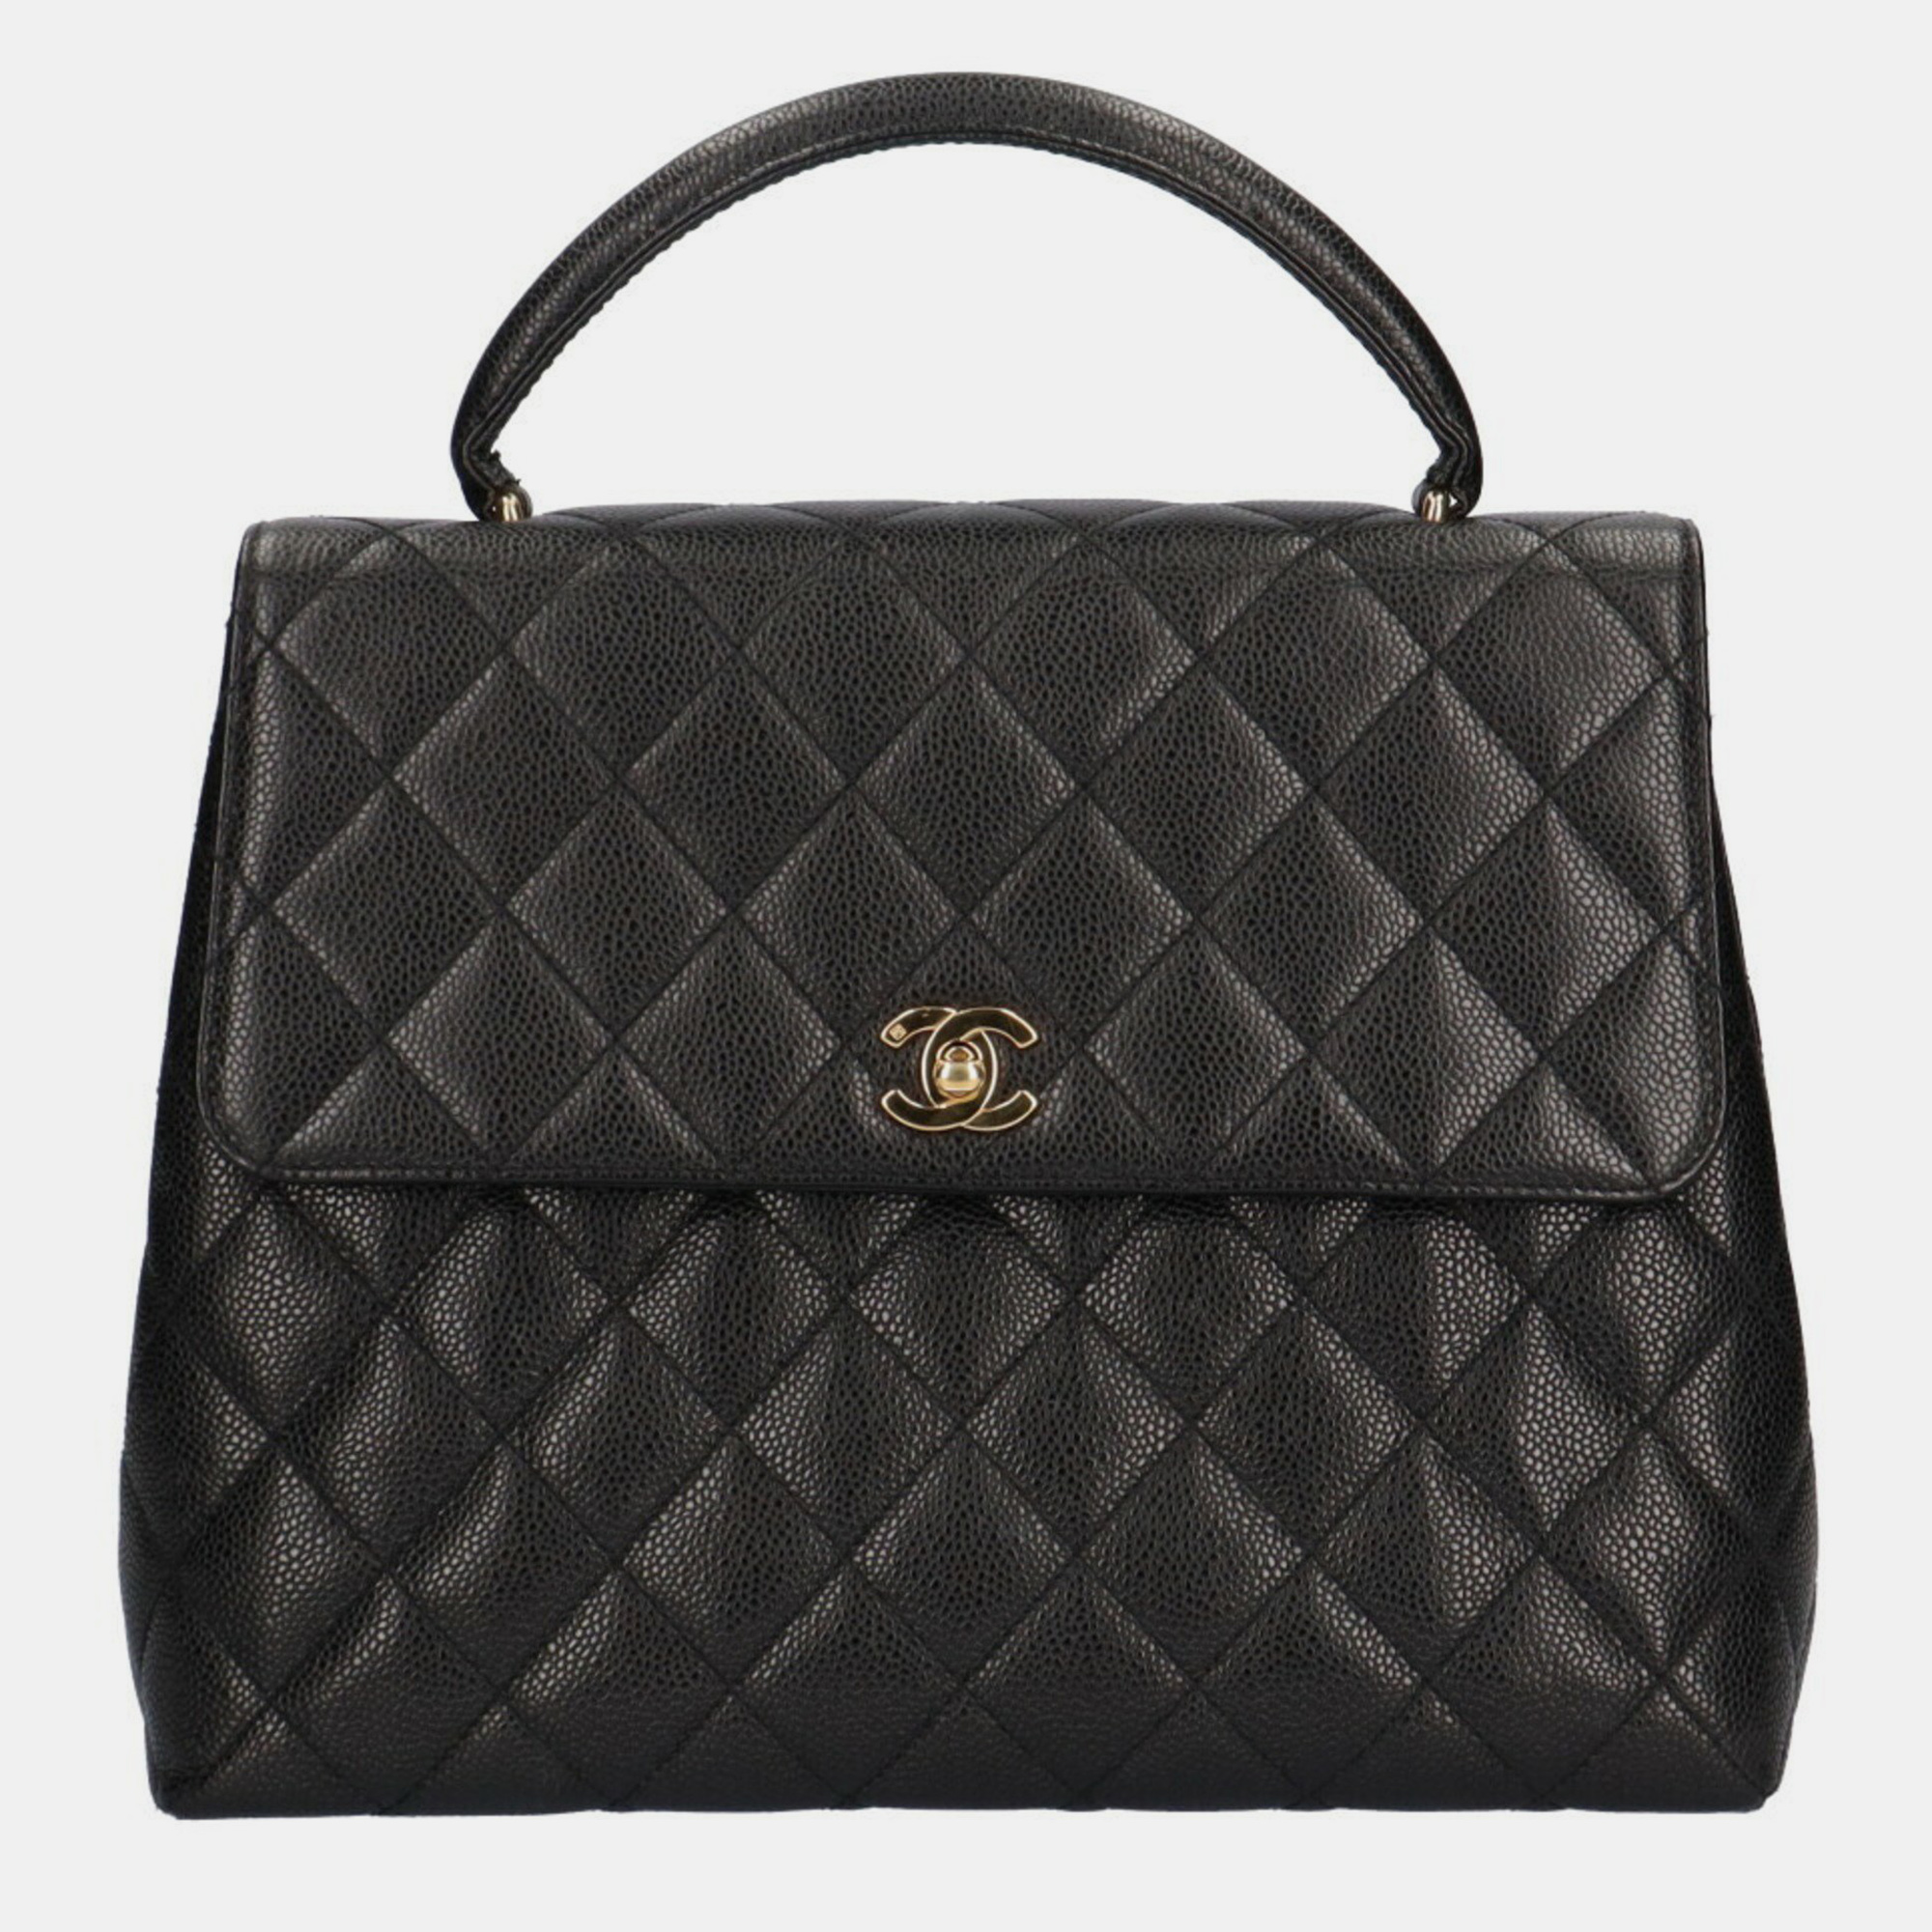 Chanel black caviar leather vintage kelly bag